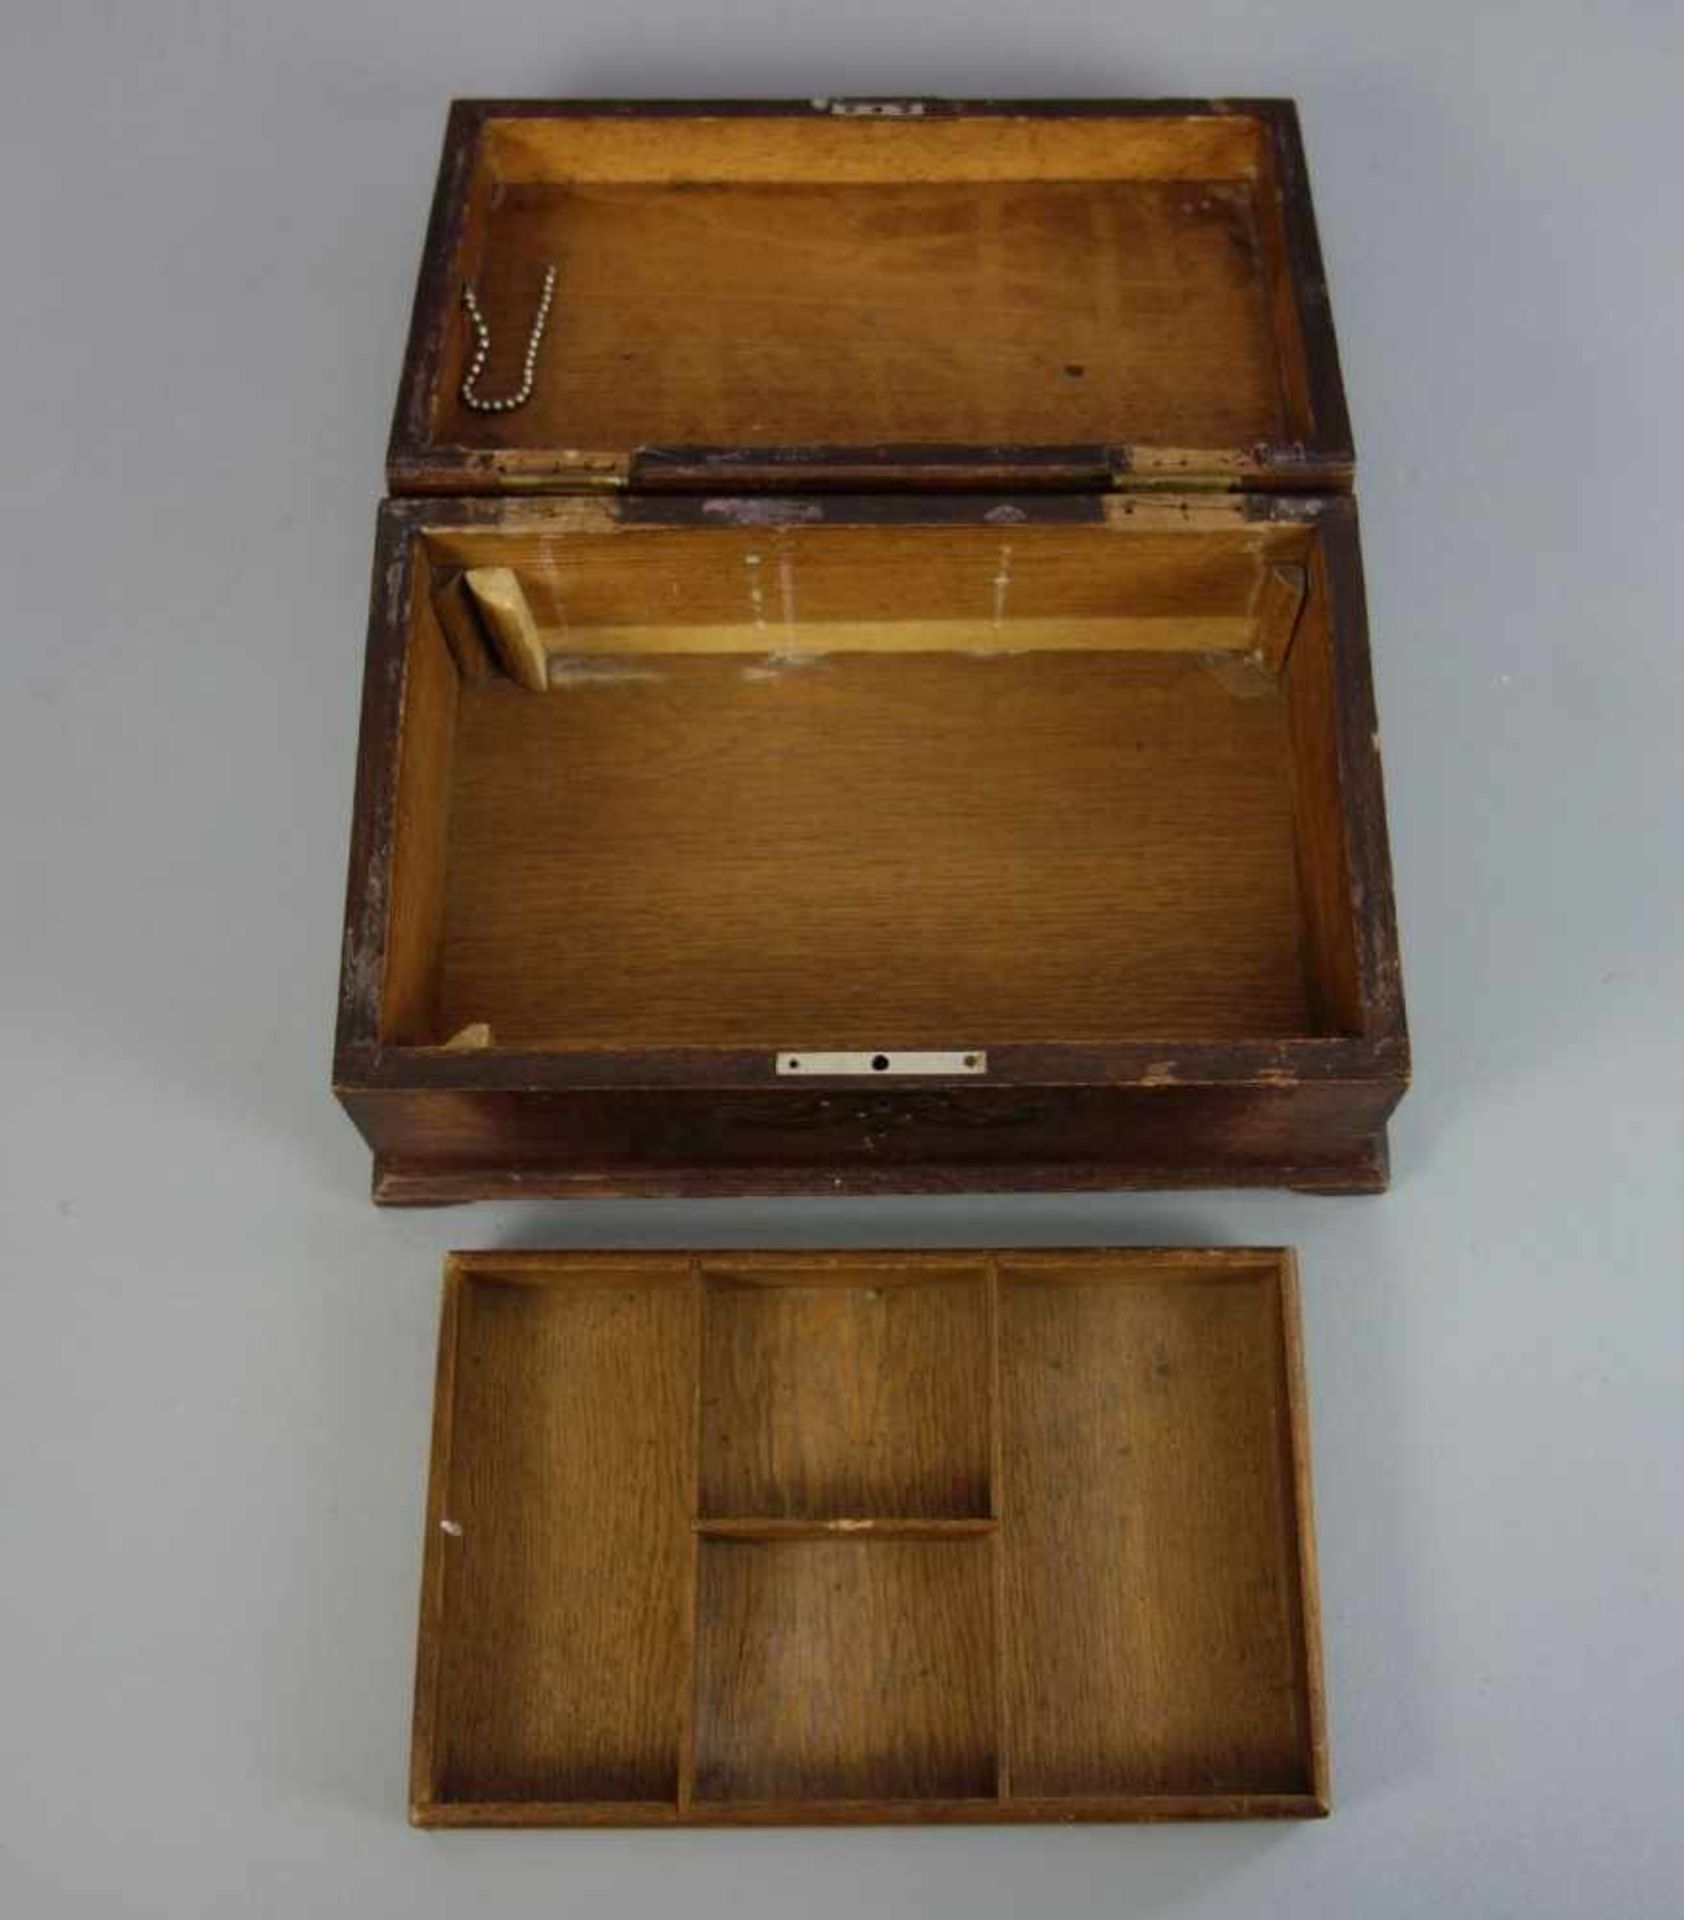 JUGENDSTIL SCHATULLE / art nouveau box, um 1900. Eiche, rotbraun lasiert. Rechteckige Schatulle - Bild 3 aus 5